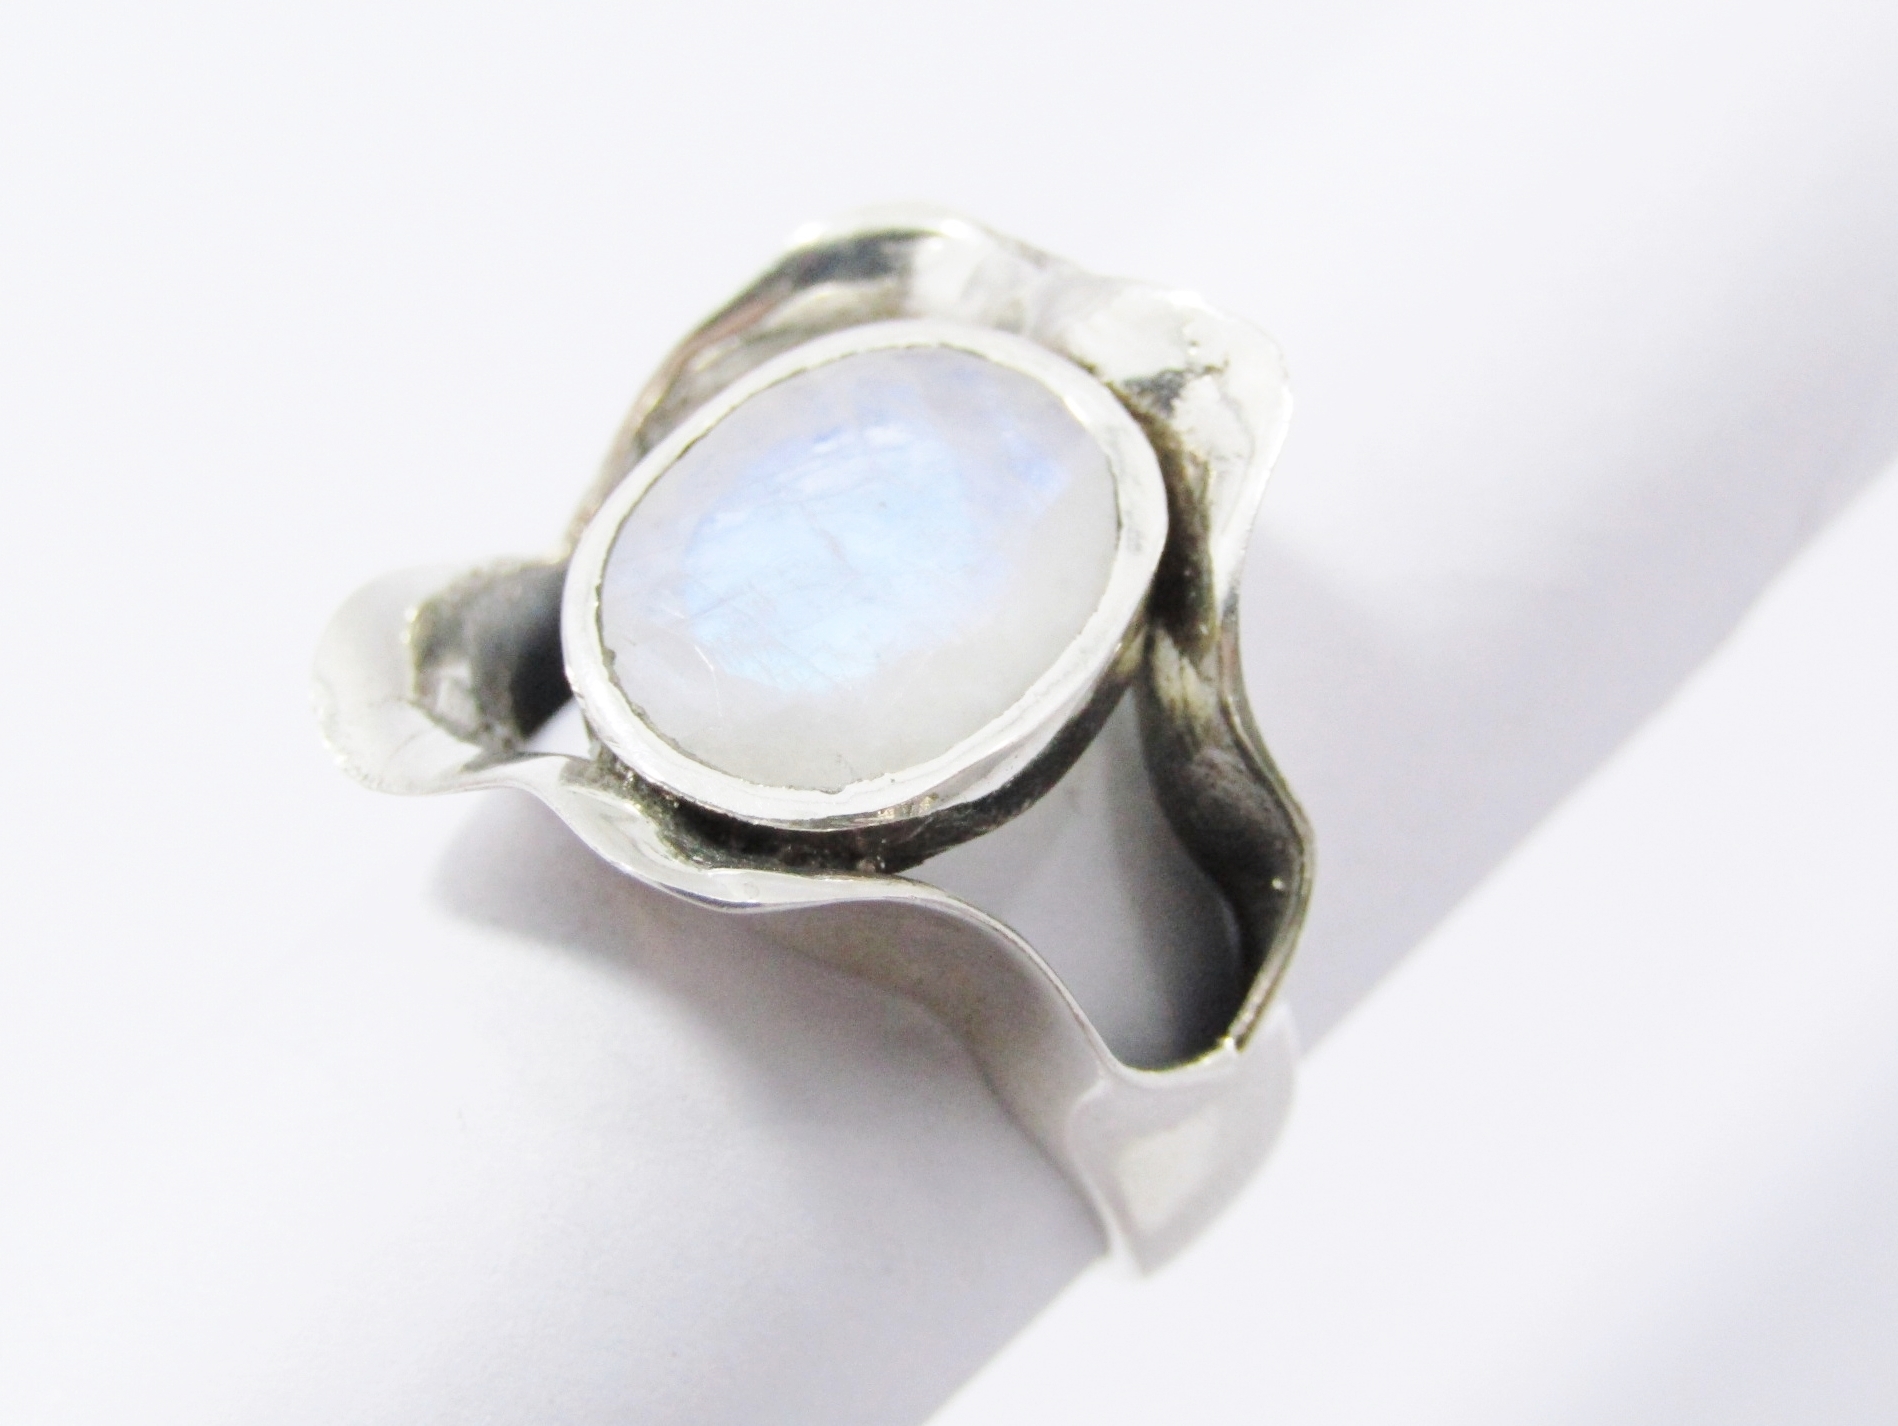 A Lovely Handmade Moonstone Ring in Sterling Silver.